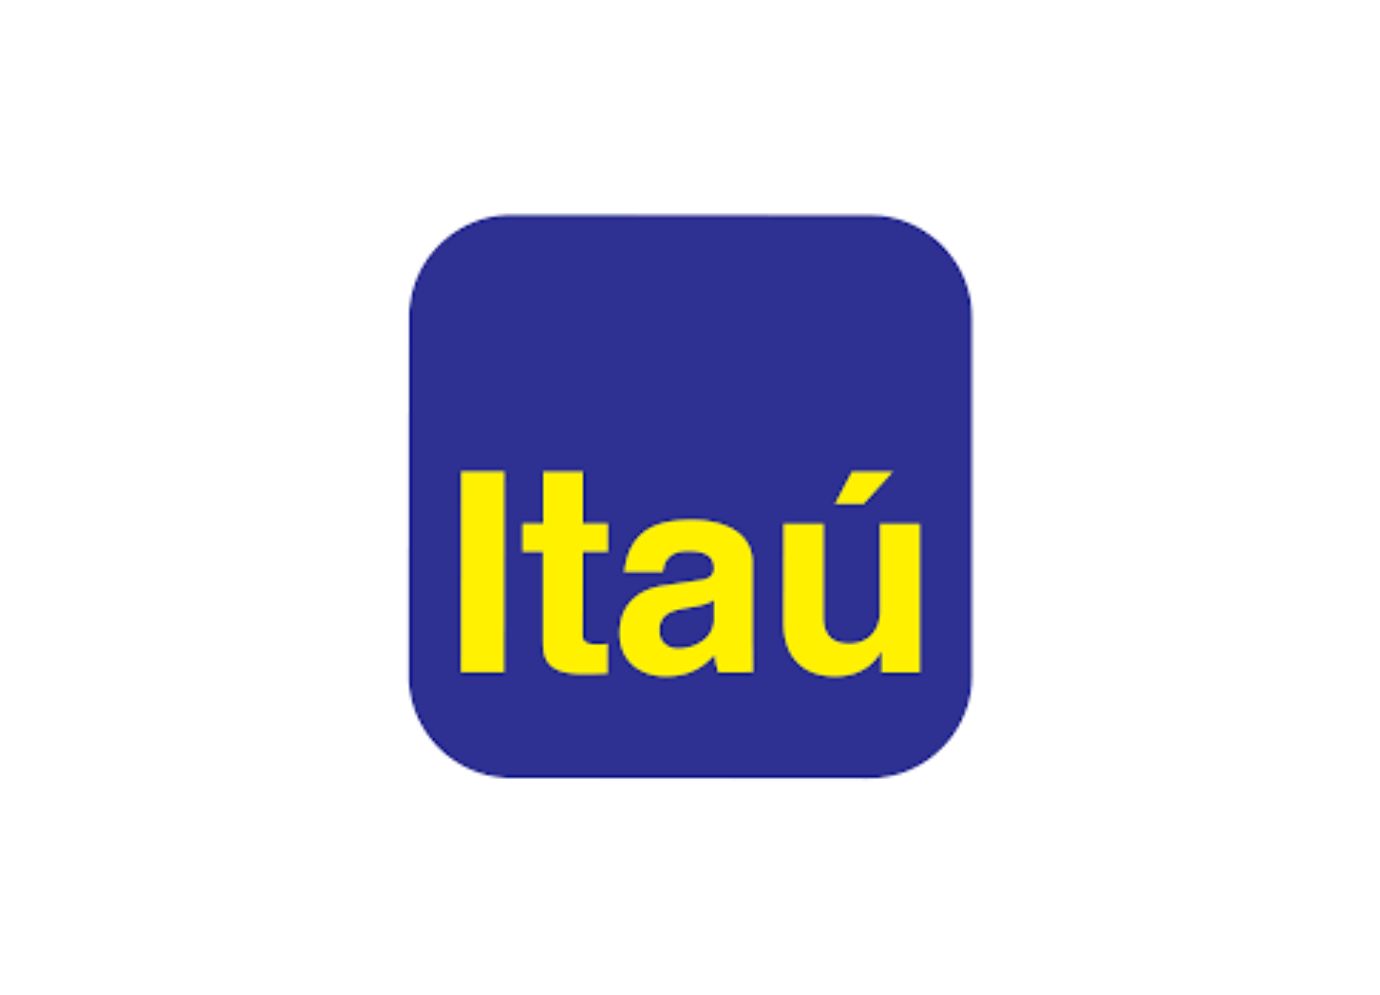 O banco Itaú possui diversas vagas abertas! Fonte: Itaú.